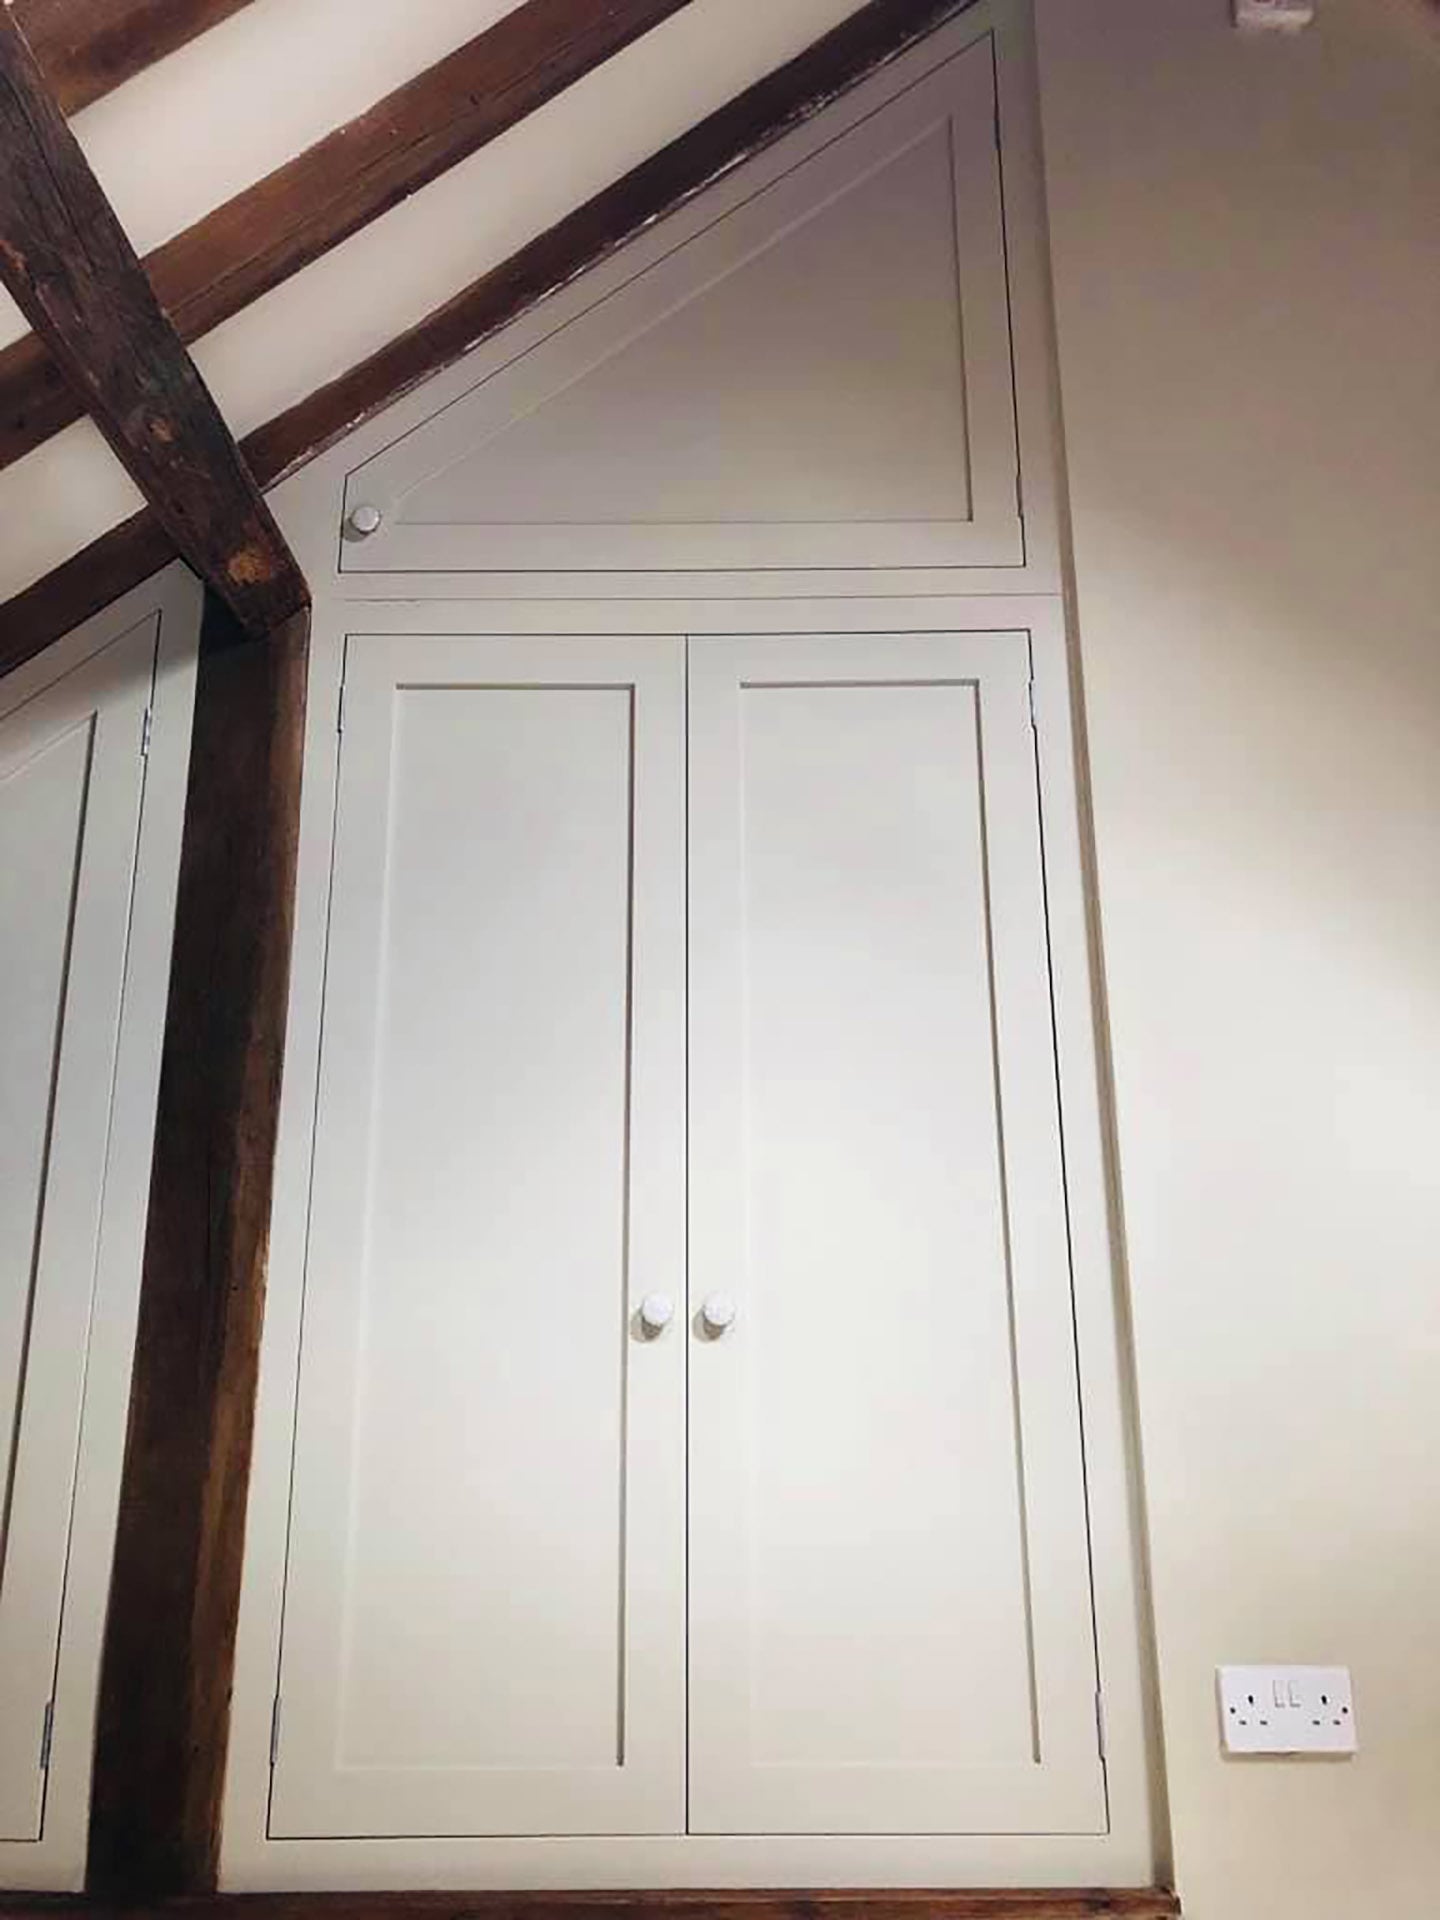 Bespoke wardrobe in attic bedroom with wooden beams